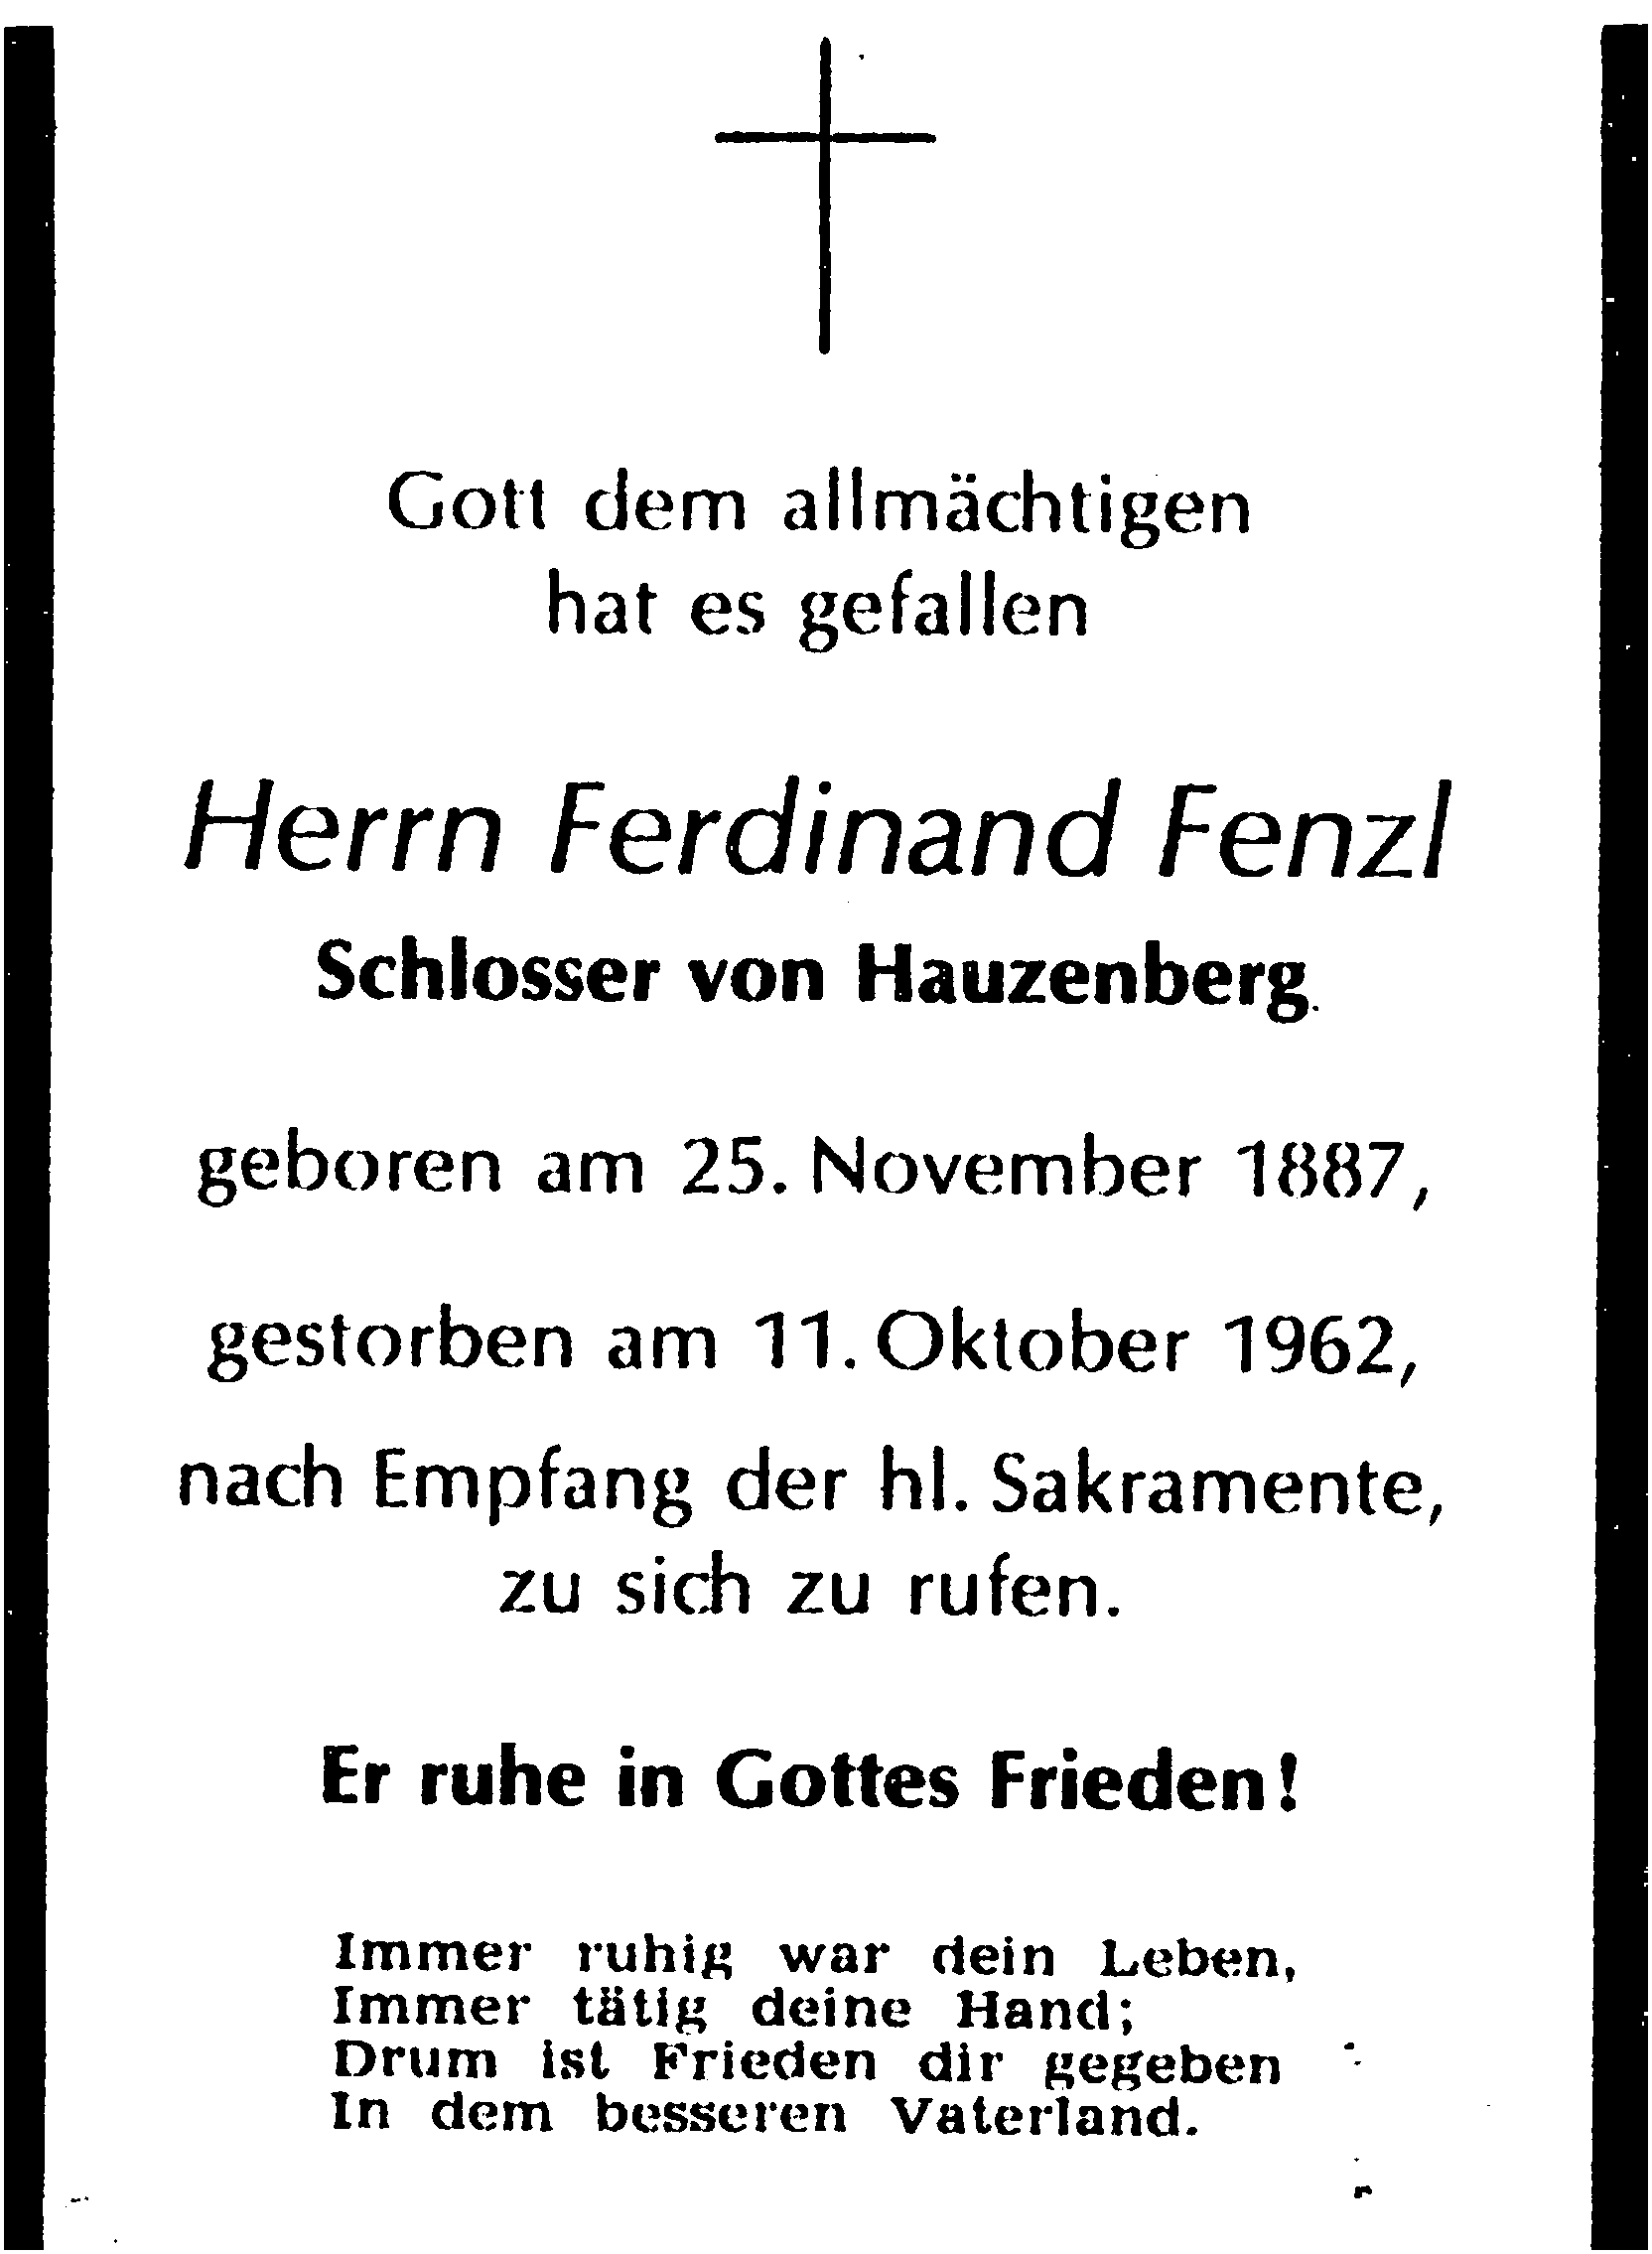 1962-10-11-Fenzl-Ferdinand-Hauzenberg-Schlosser